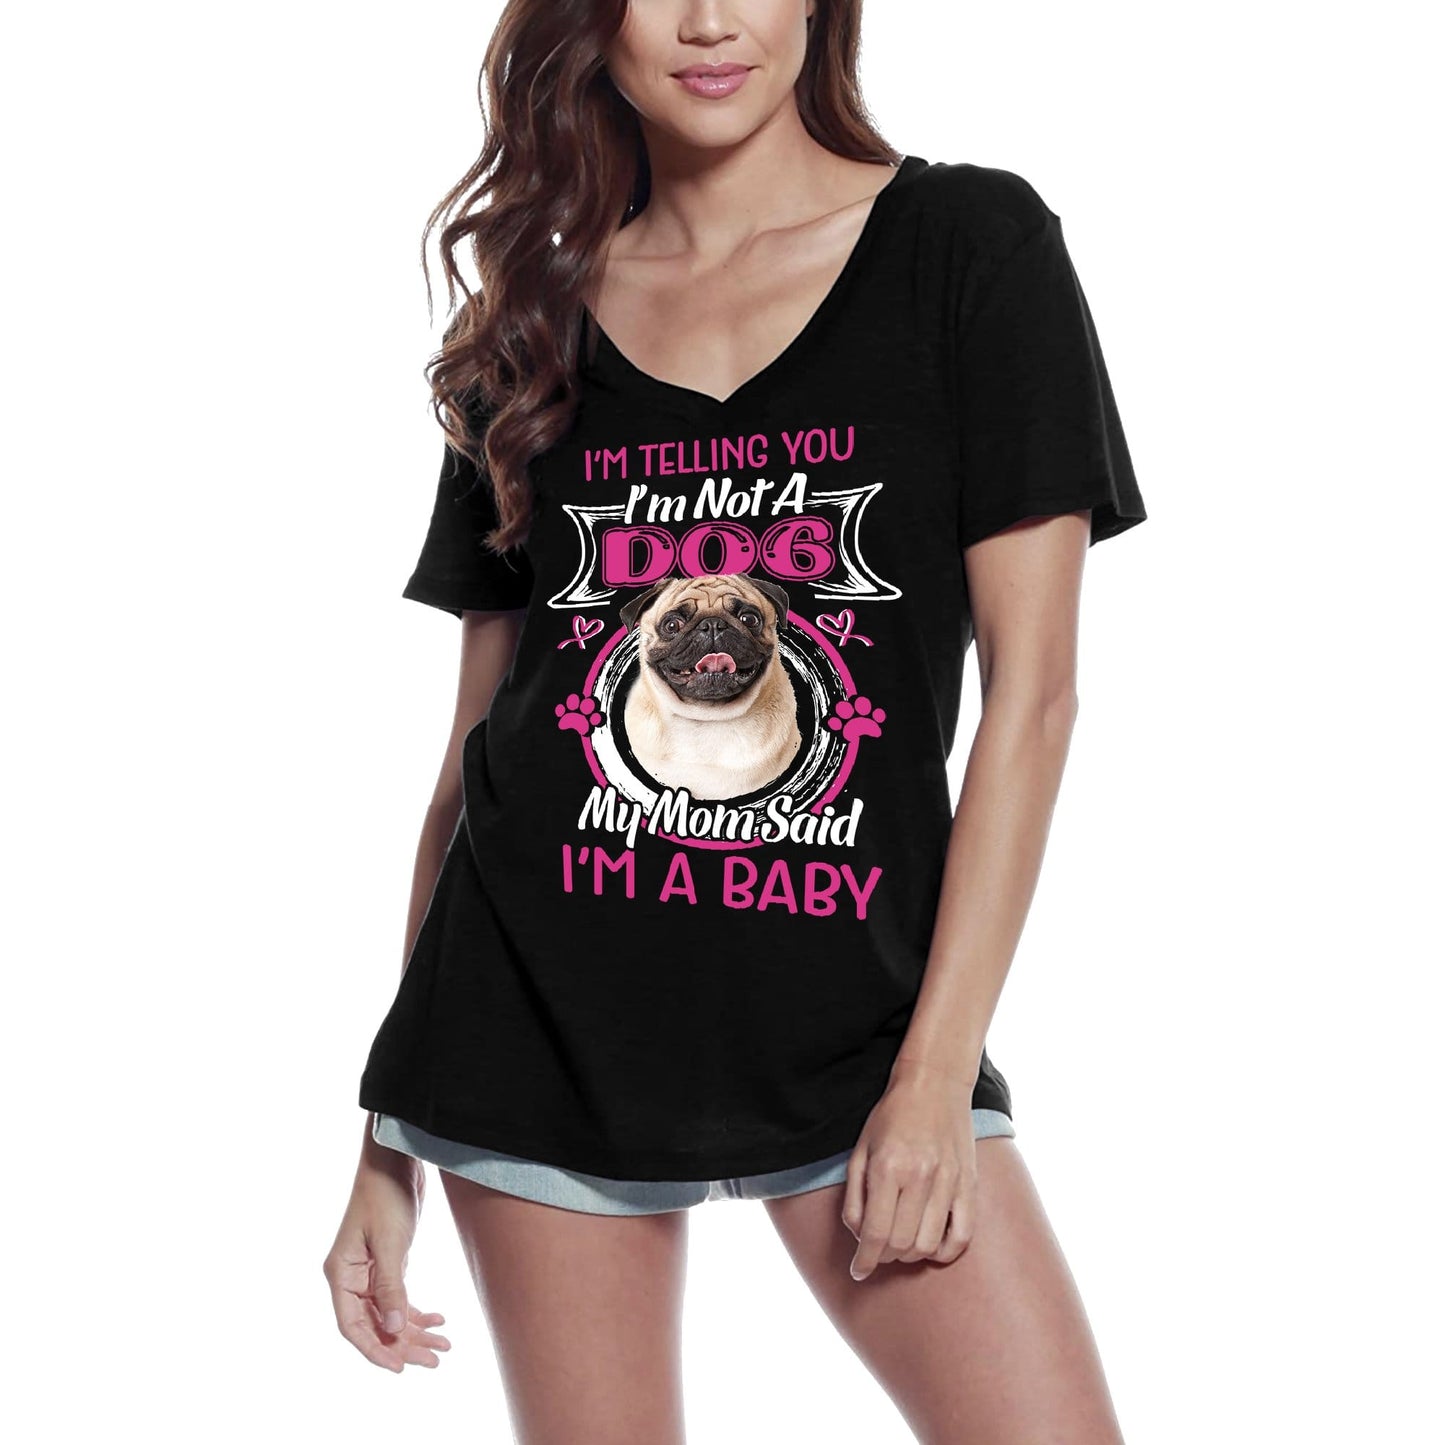 ULTRABASIC Women's T-Shirt I'm Telling You I'm Not a Pug - My Mom Said I'm a Baby - Cute Puppy Dog Lover Tee Shirt